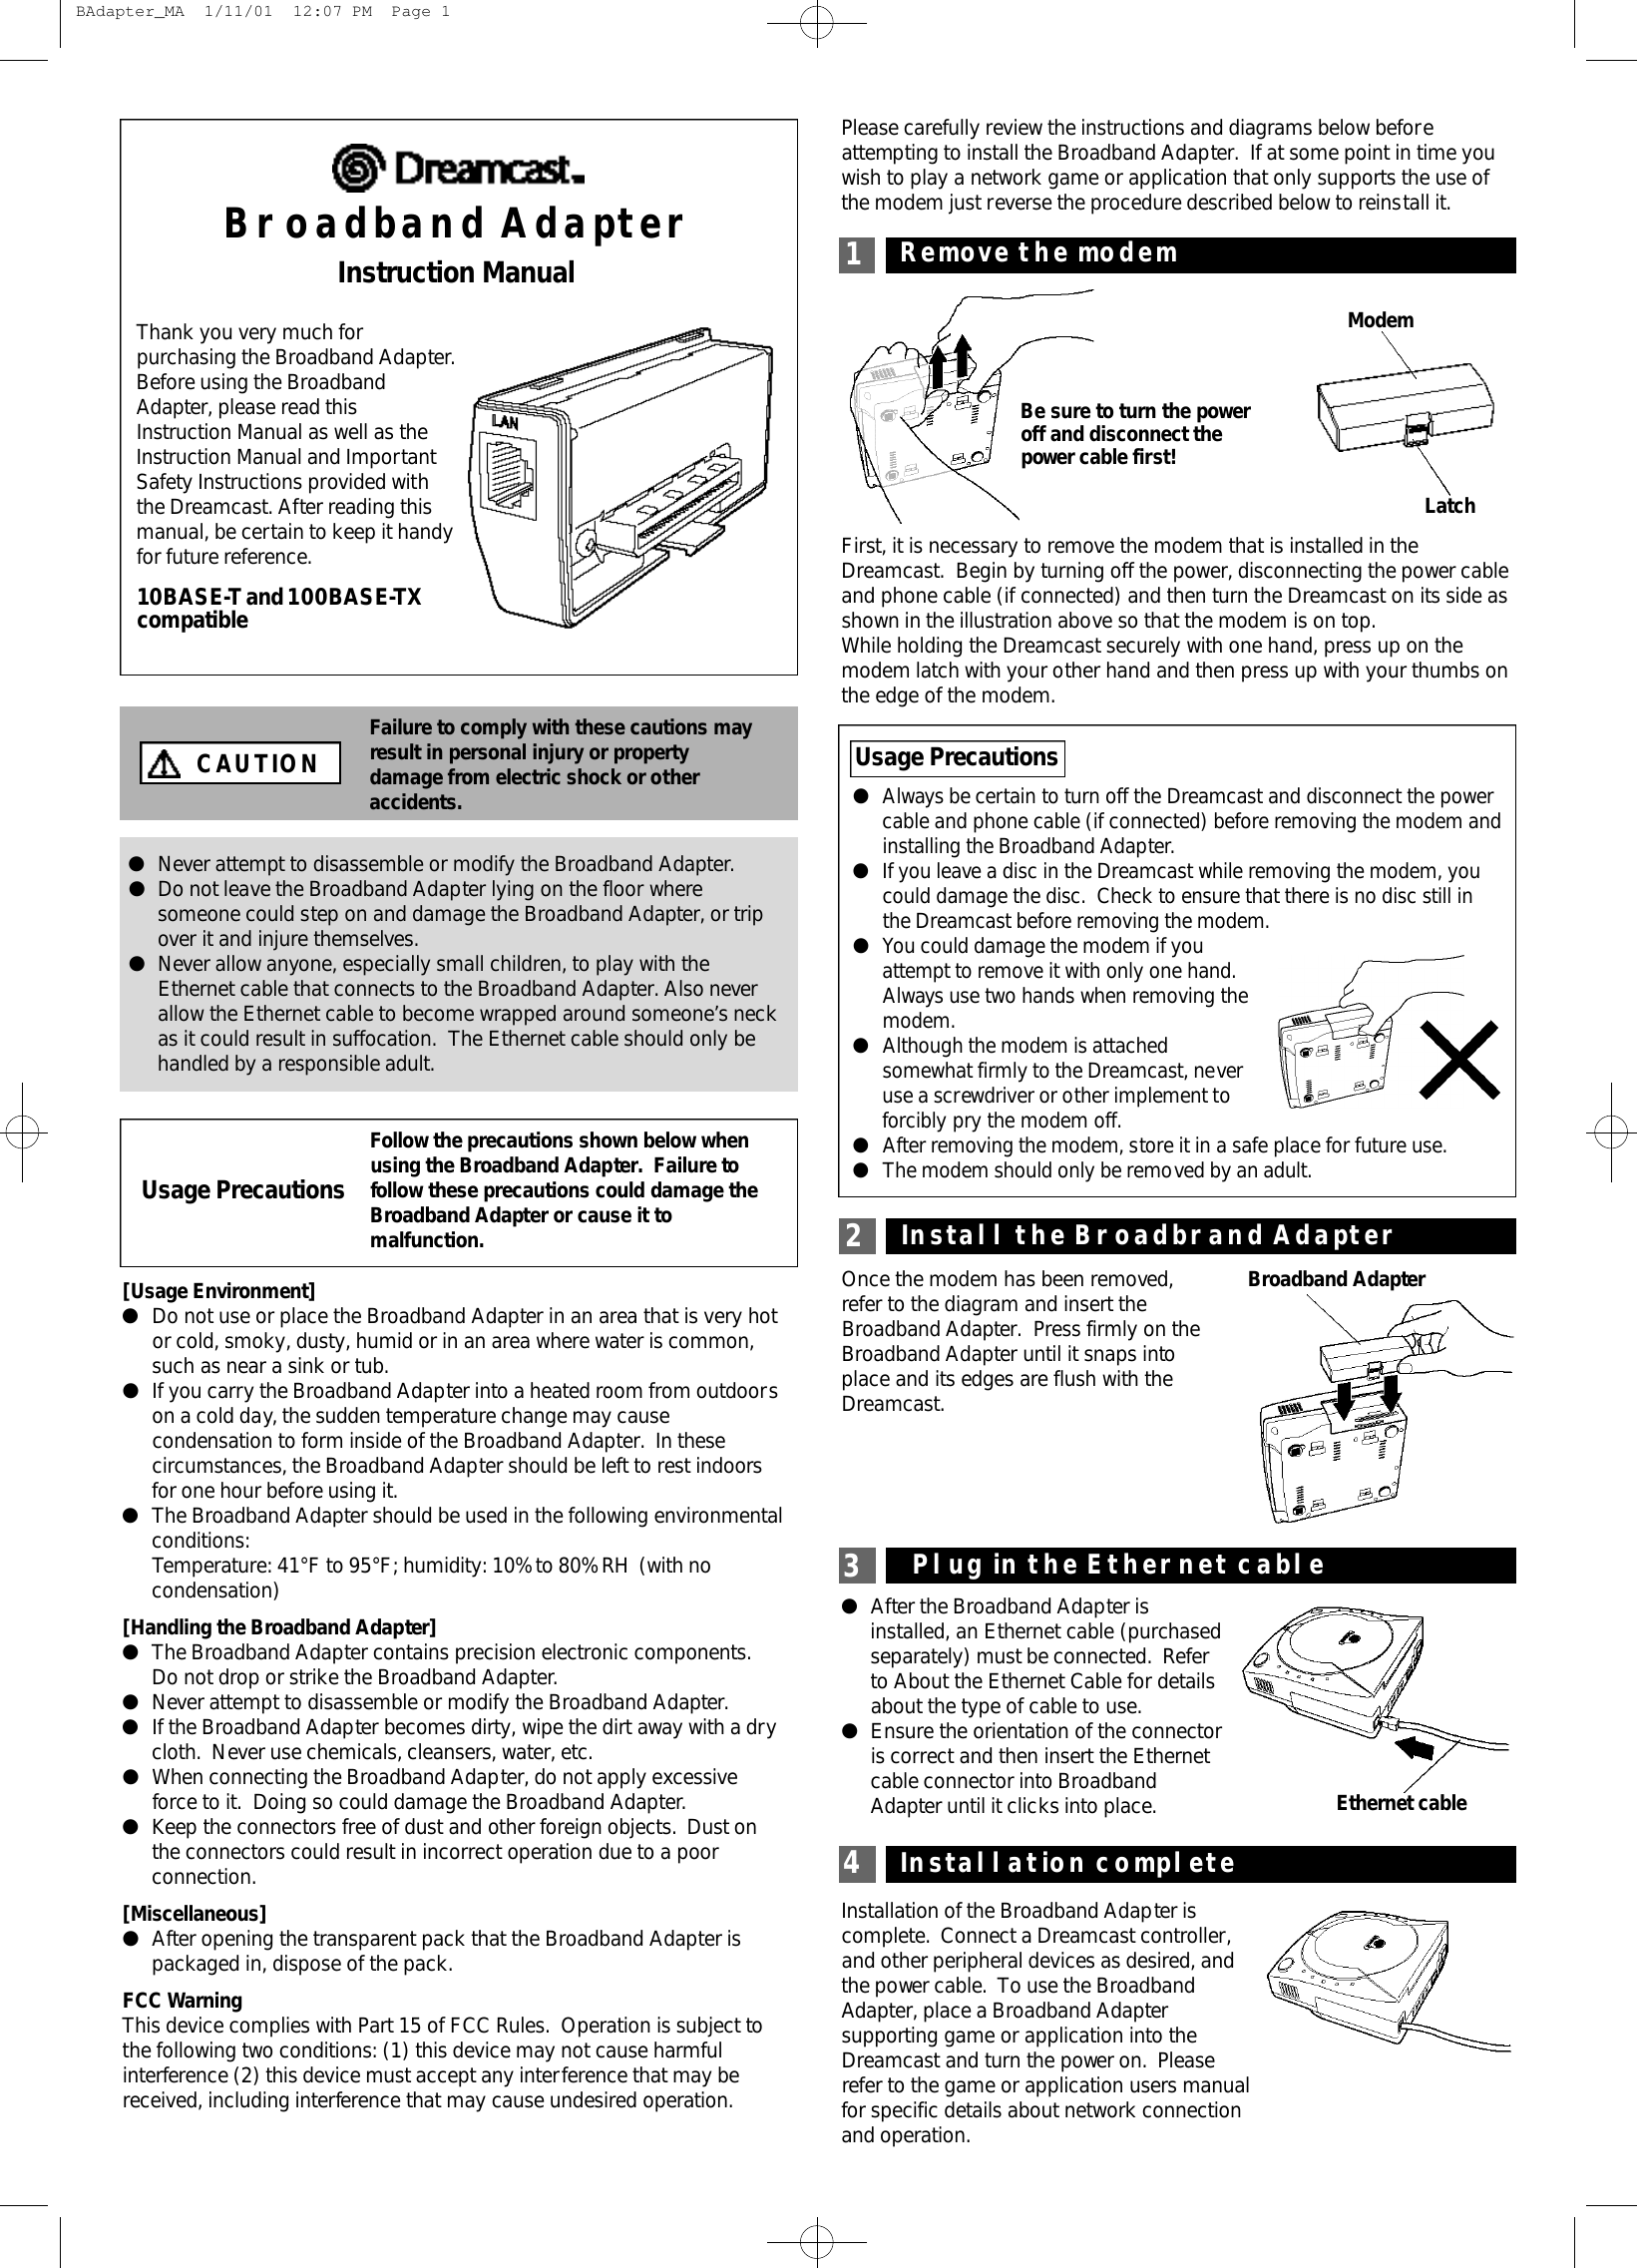 Page 1 of 2 - Broadband Adapter (108K) Manual